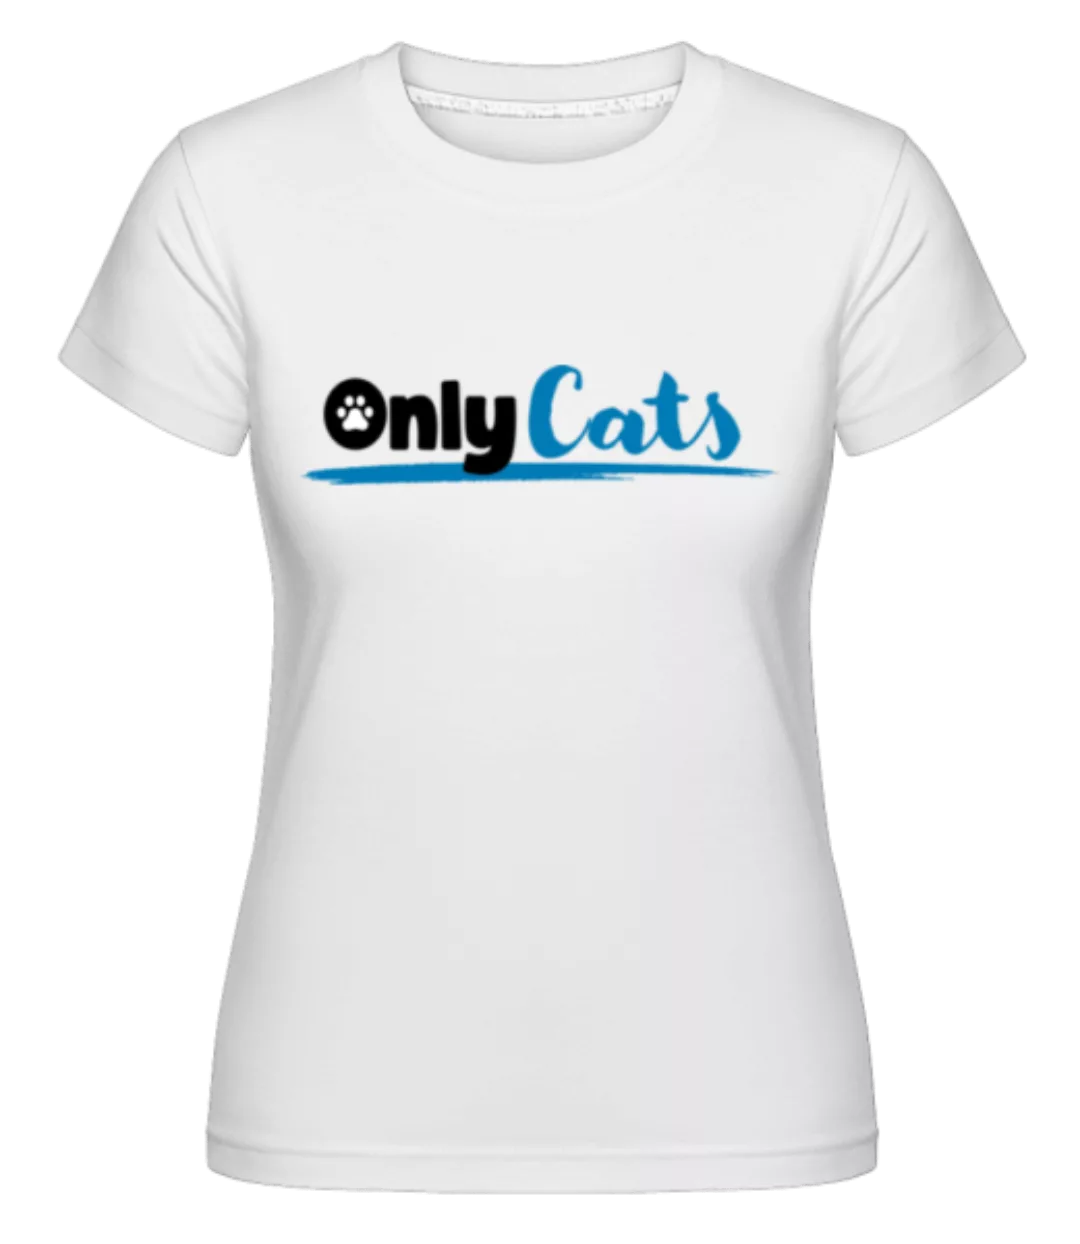 Only Cats · Shirtinator Frauen T-Shirt günstig online kaufen